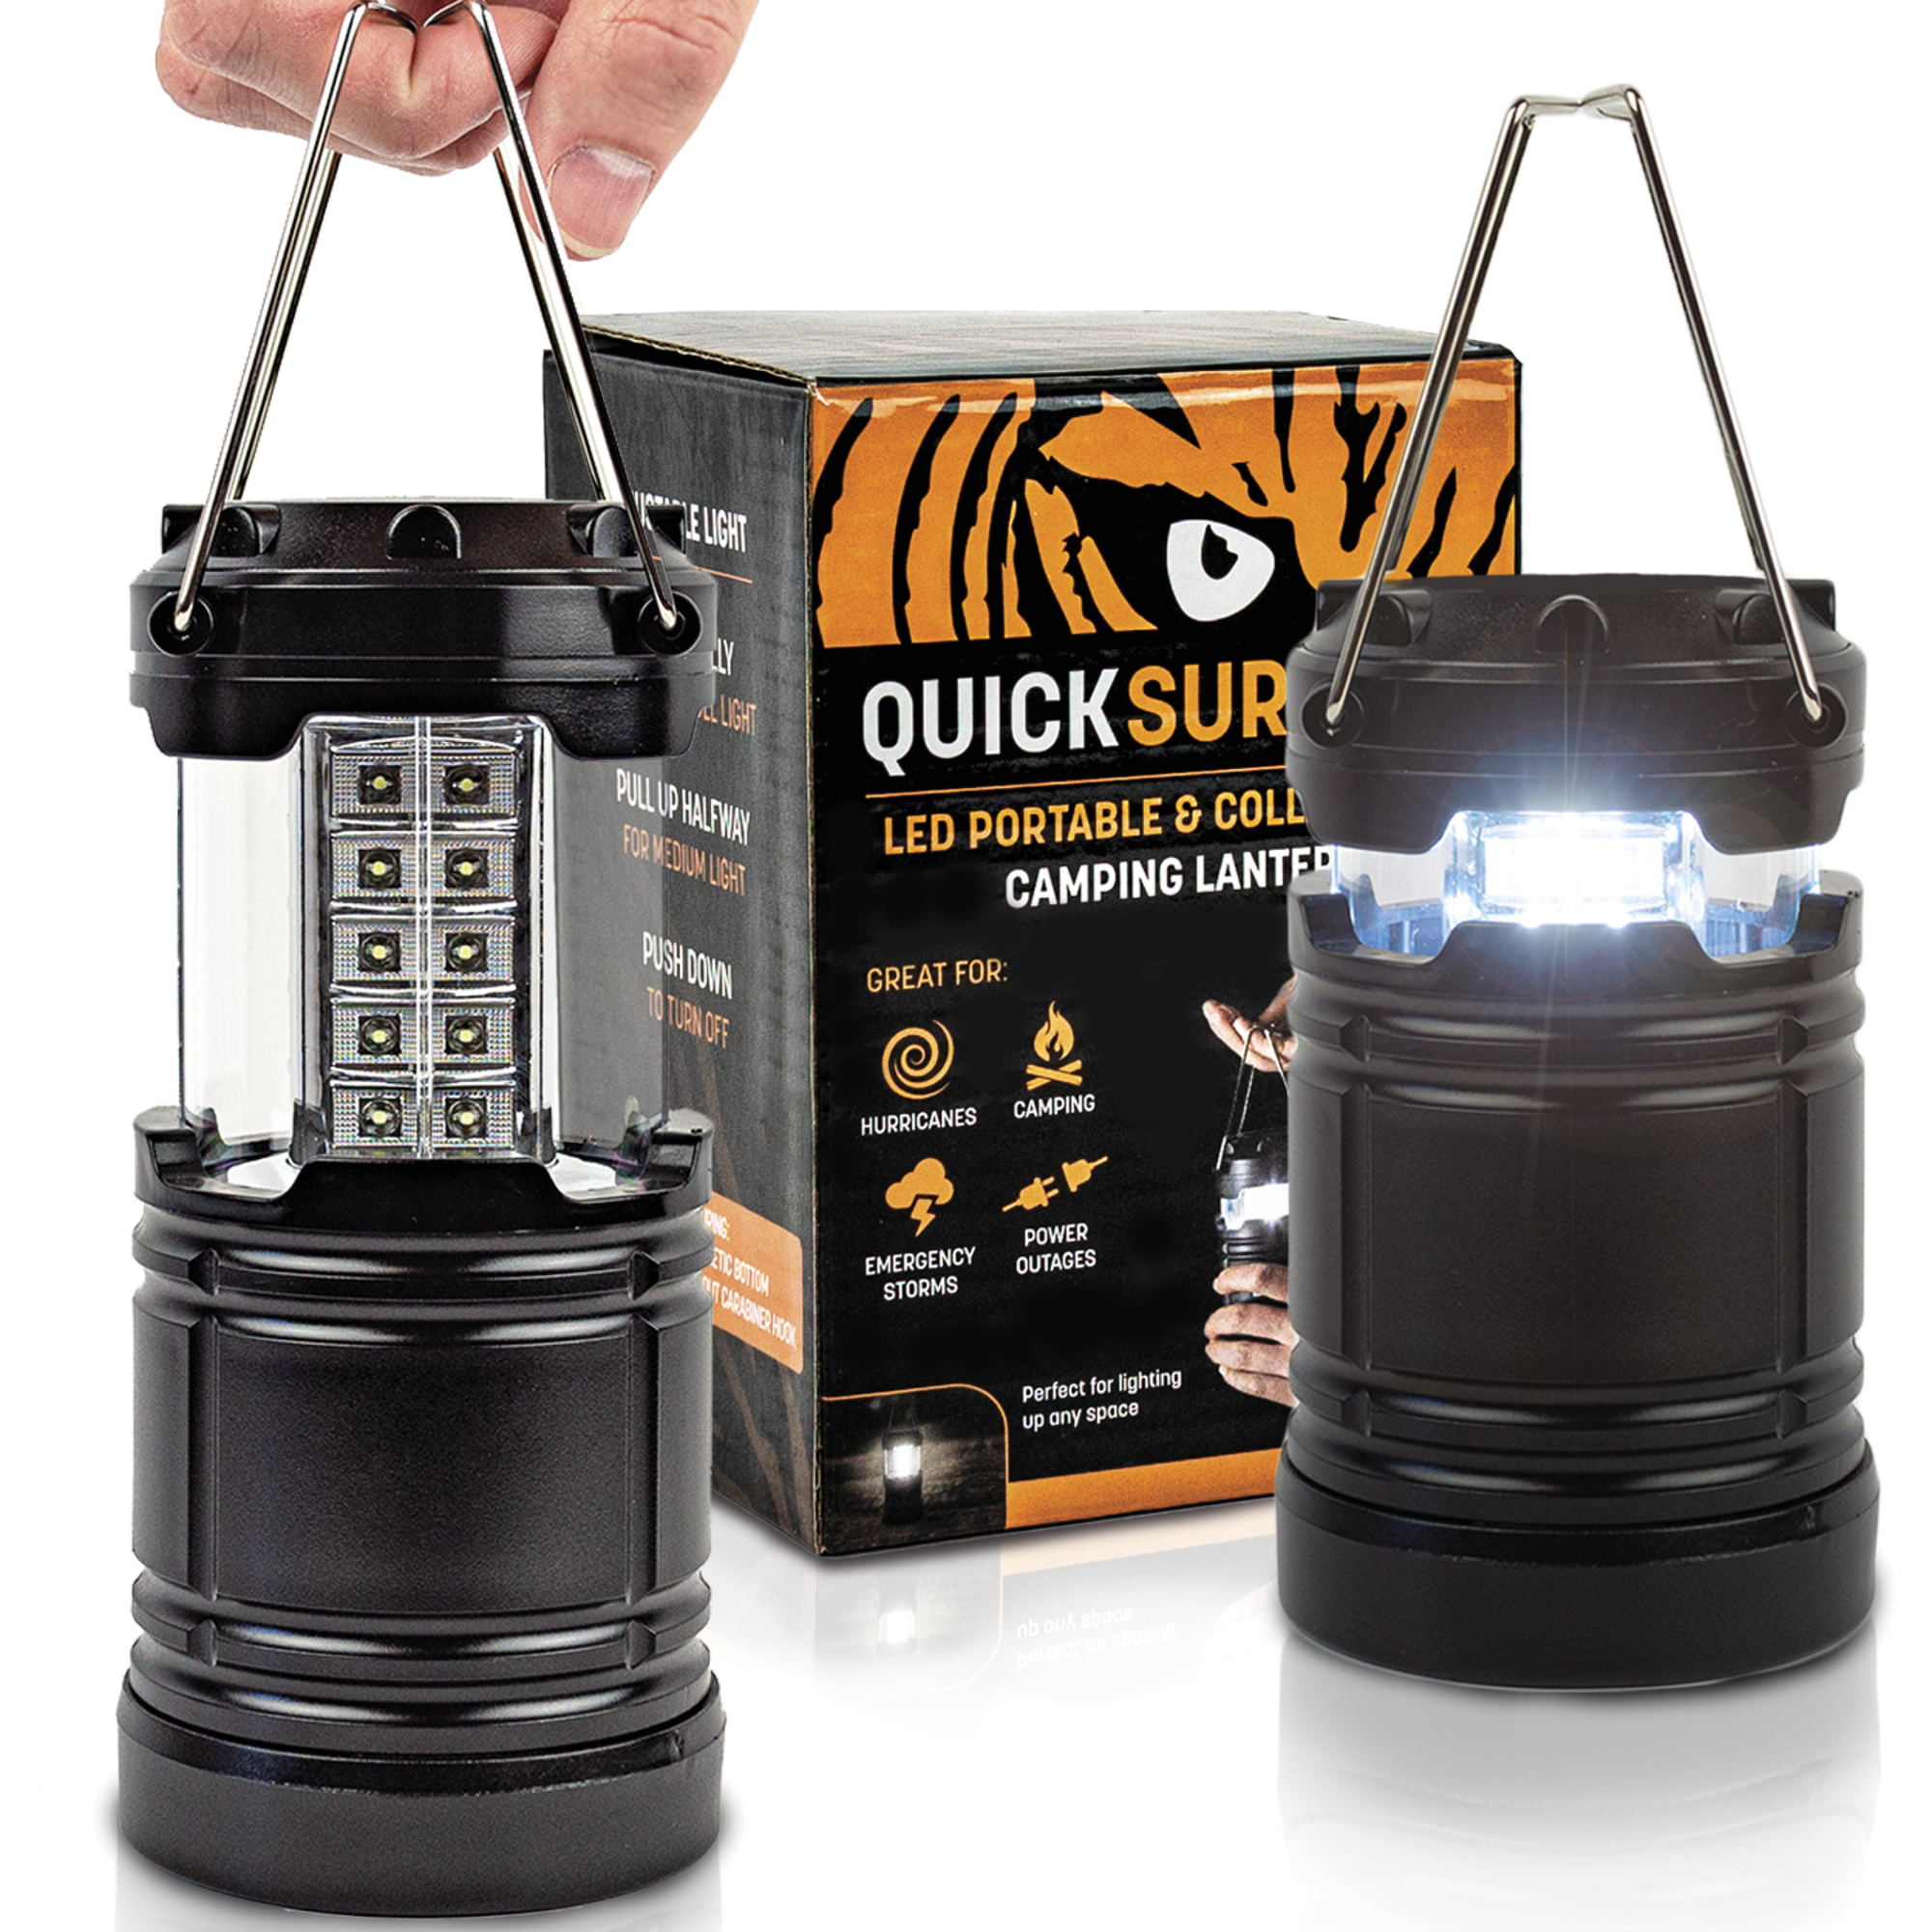 LED Emergency Portable & Collapsible Lantern